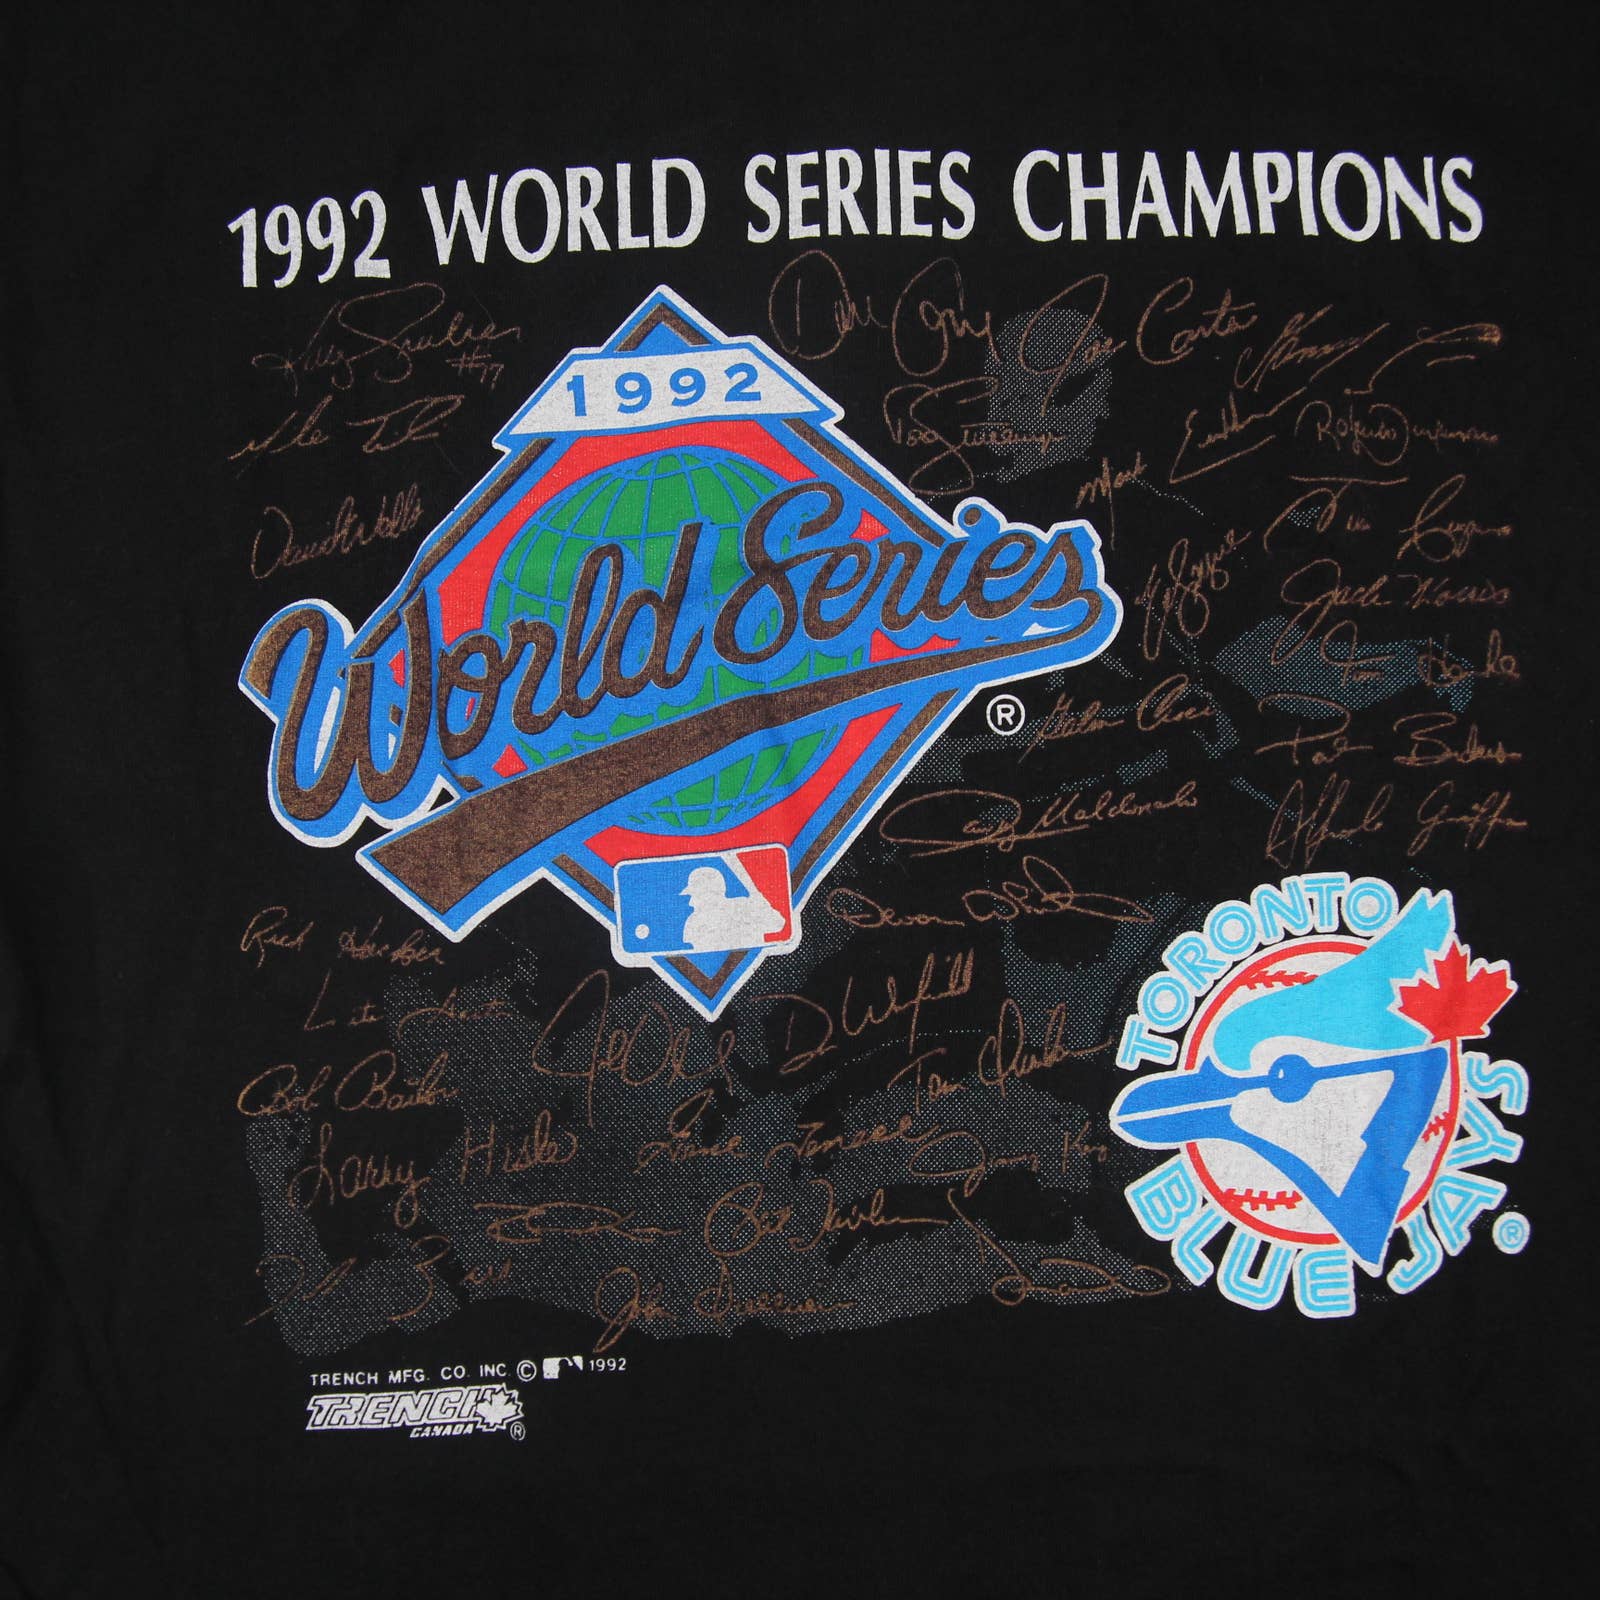 Vintage 1992 Toronto Blue Jays World Series Champions T - XL – Jak of all  Vintage